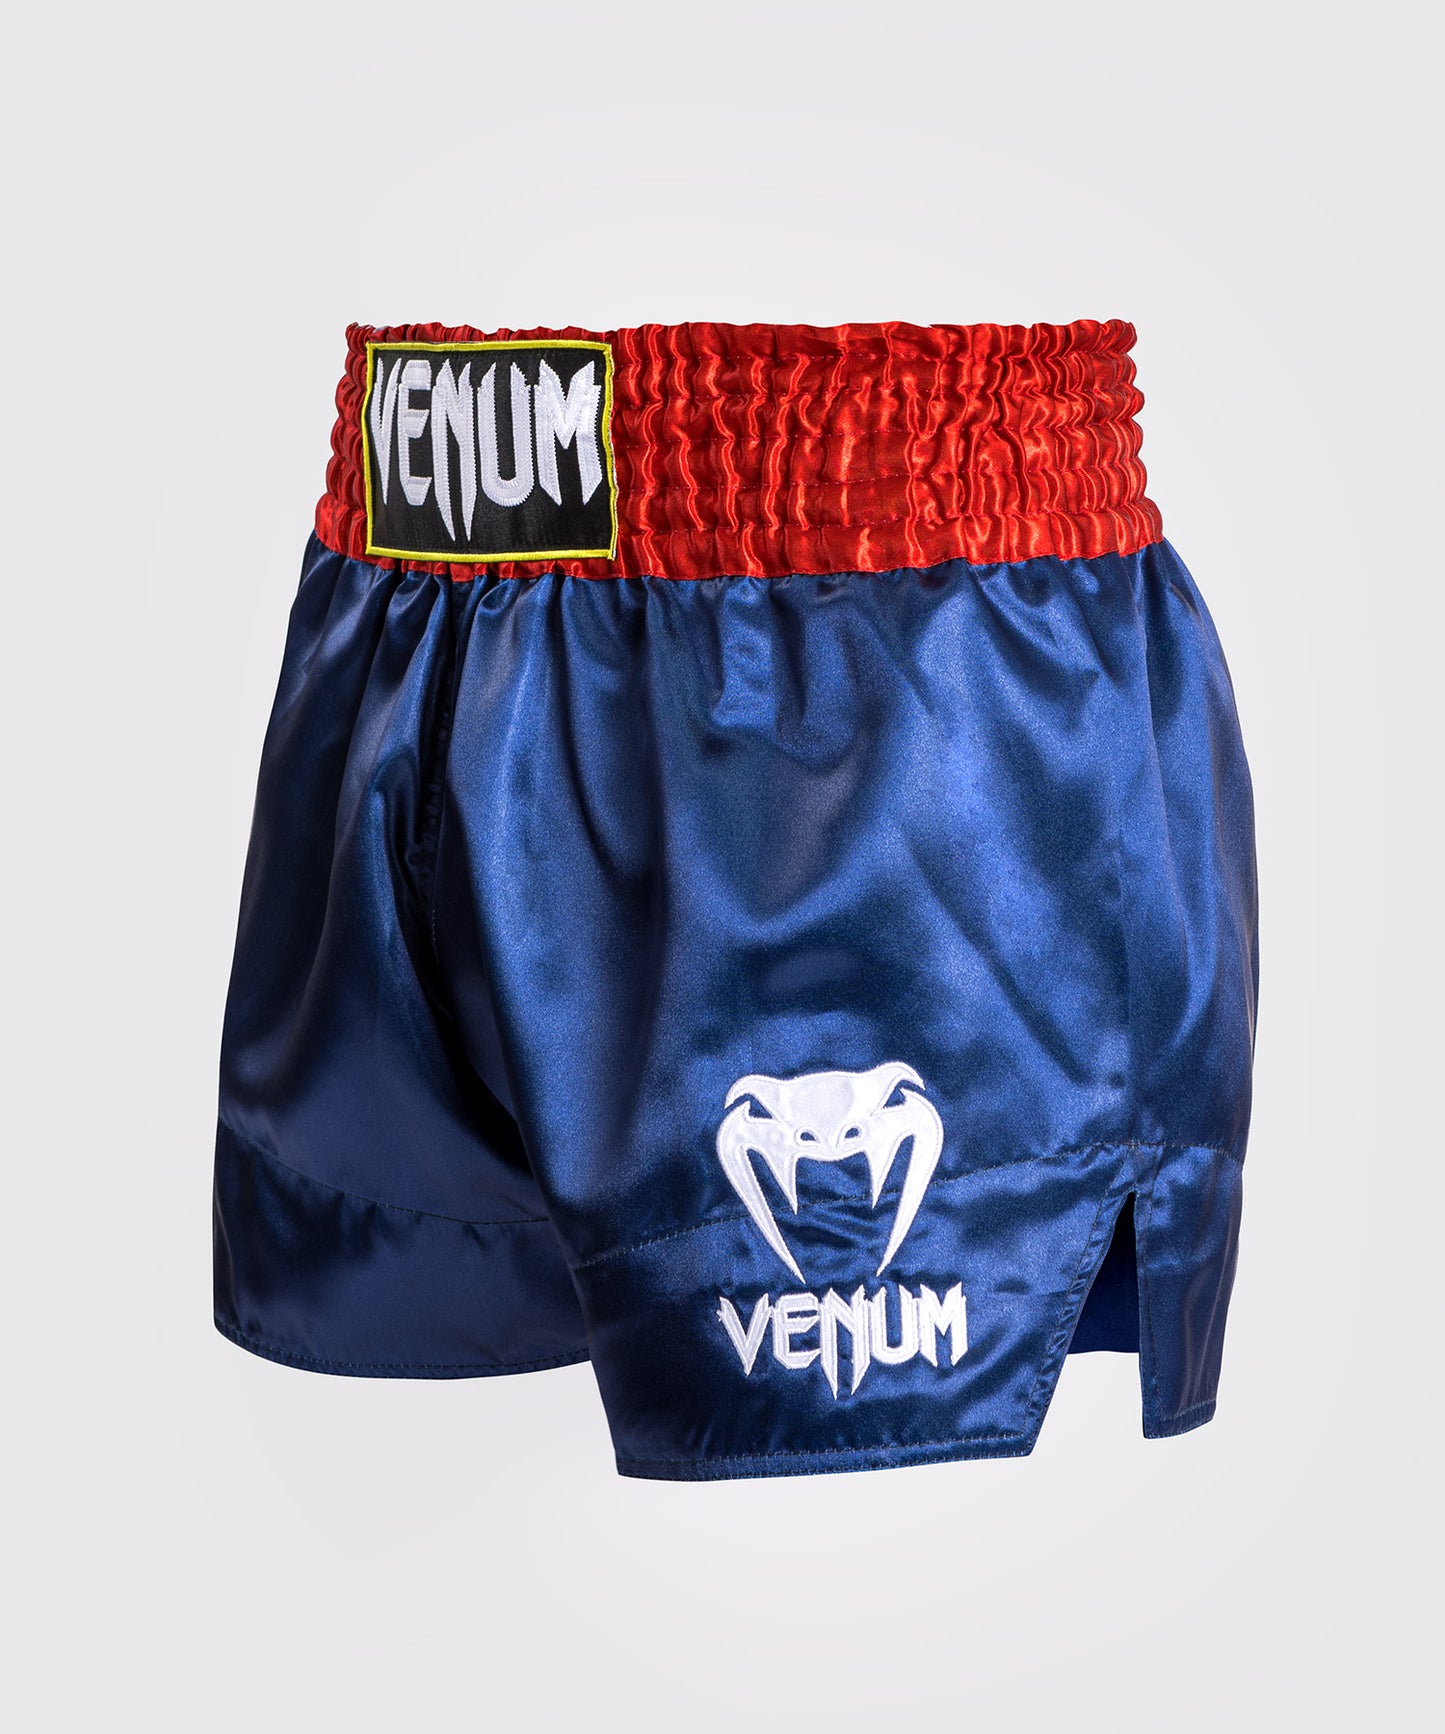 Venum Classic - Muay Thaï Short - Blue/Red/White